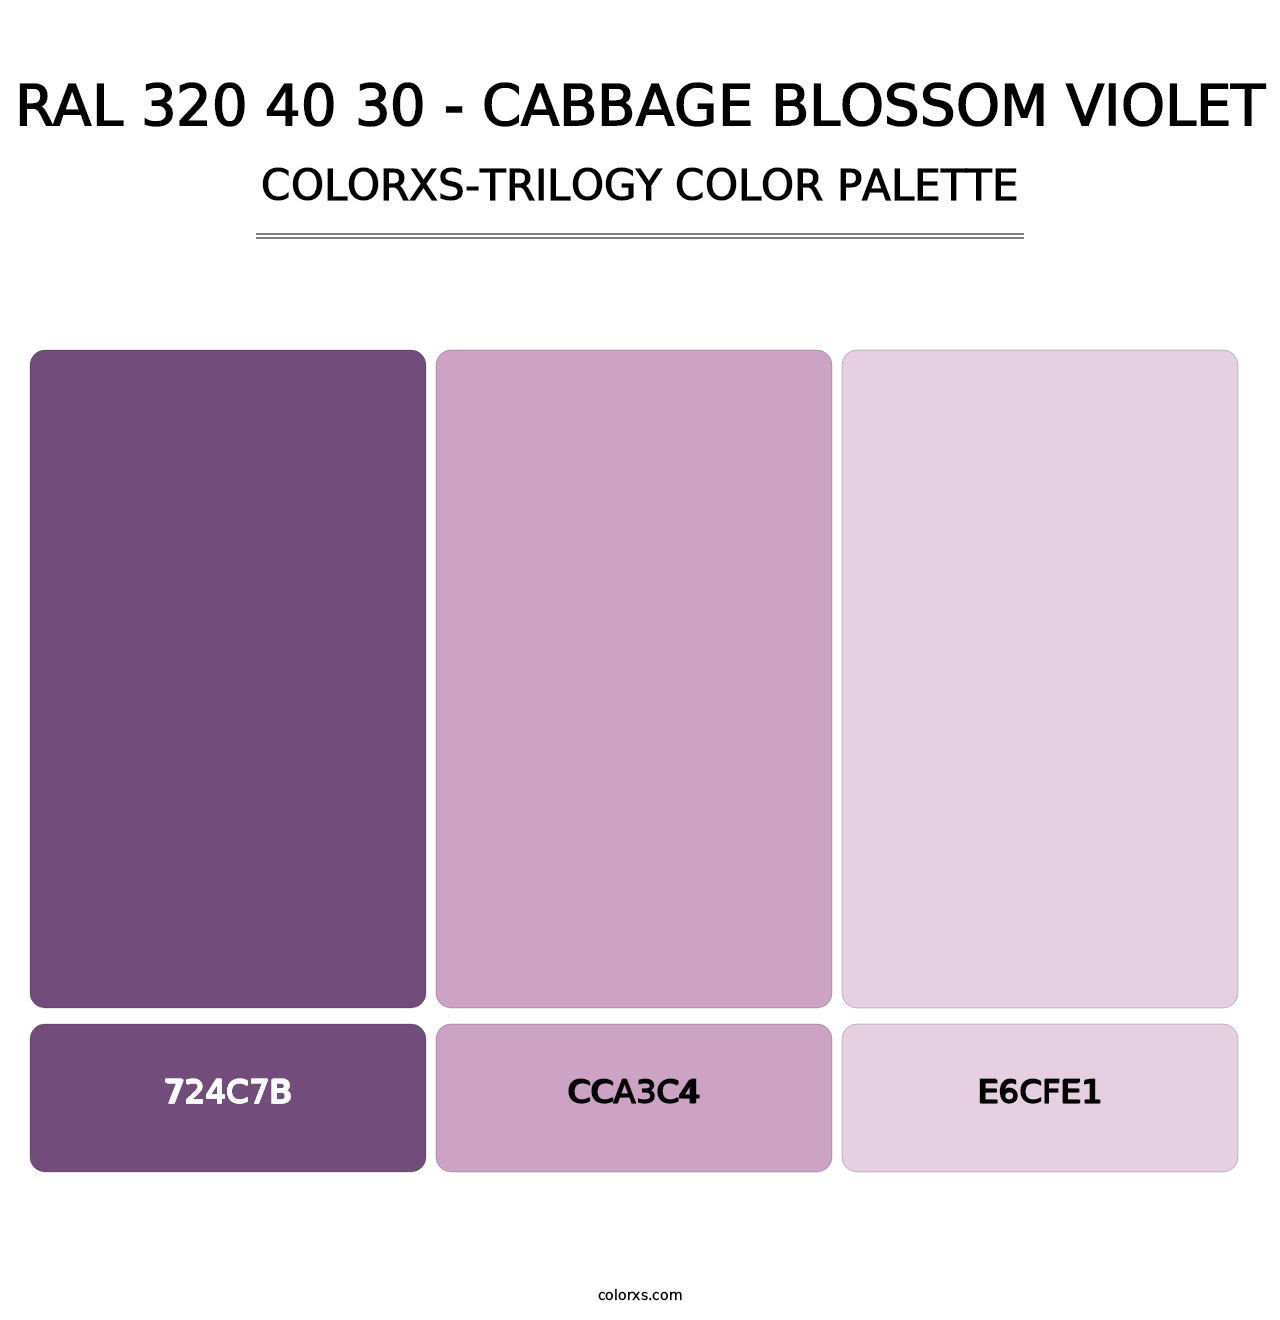 RAL 320 40 30 - Cabbage Blossom Violet - Colorxs Trilogy Palette